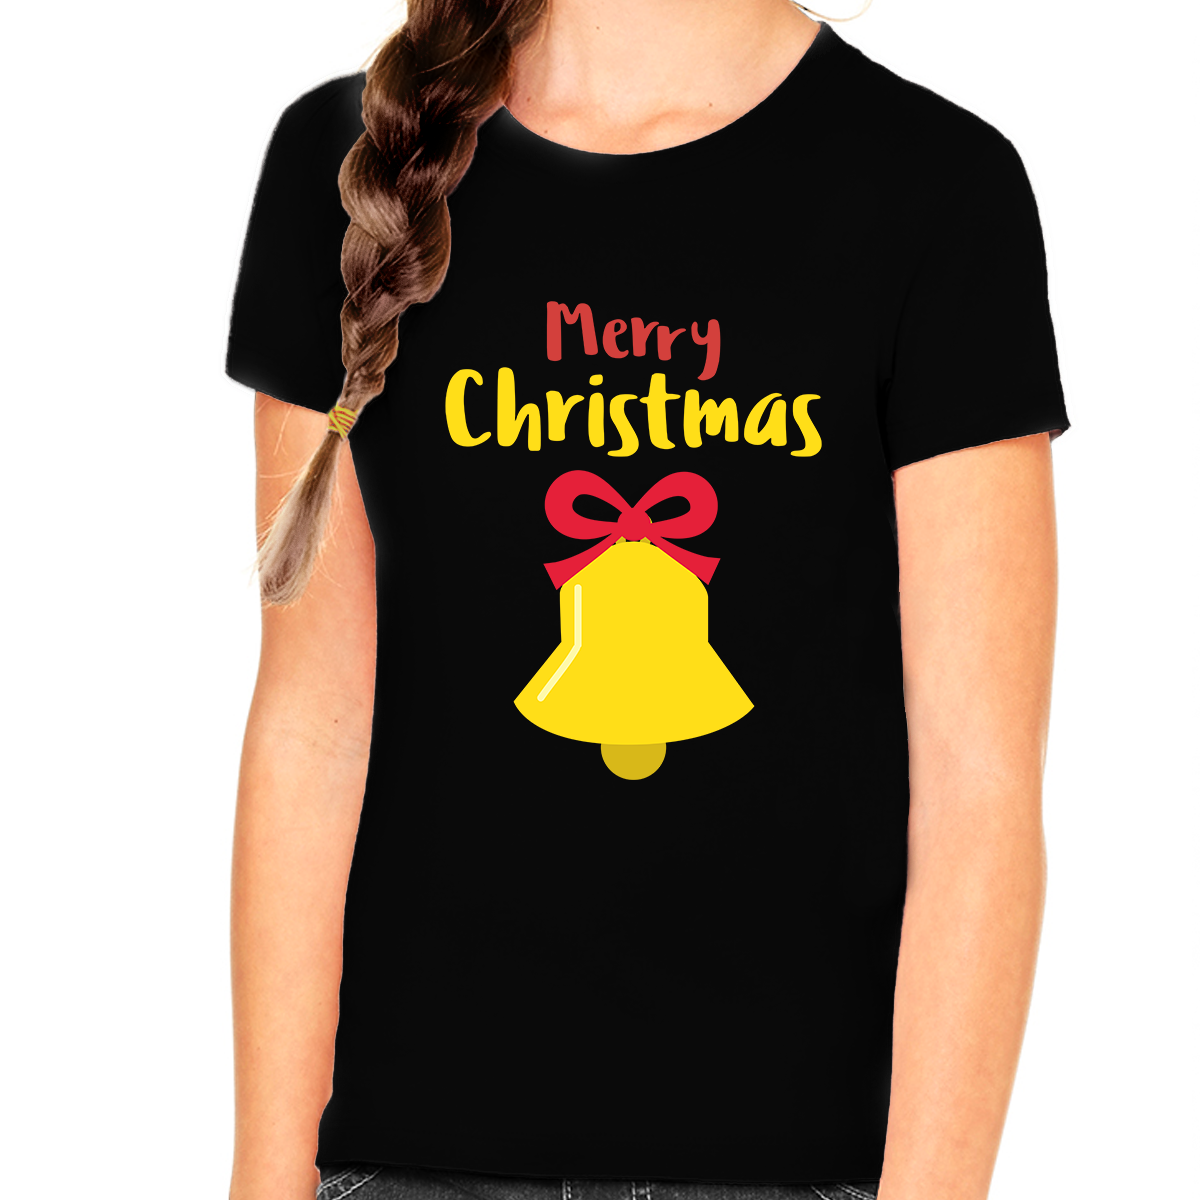 Girls Jingle Bell Kids Christmas Shirt Funny Christmas Shirts for Girls Cute Christmas Clothes for Girls